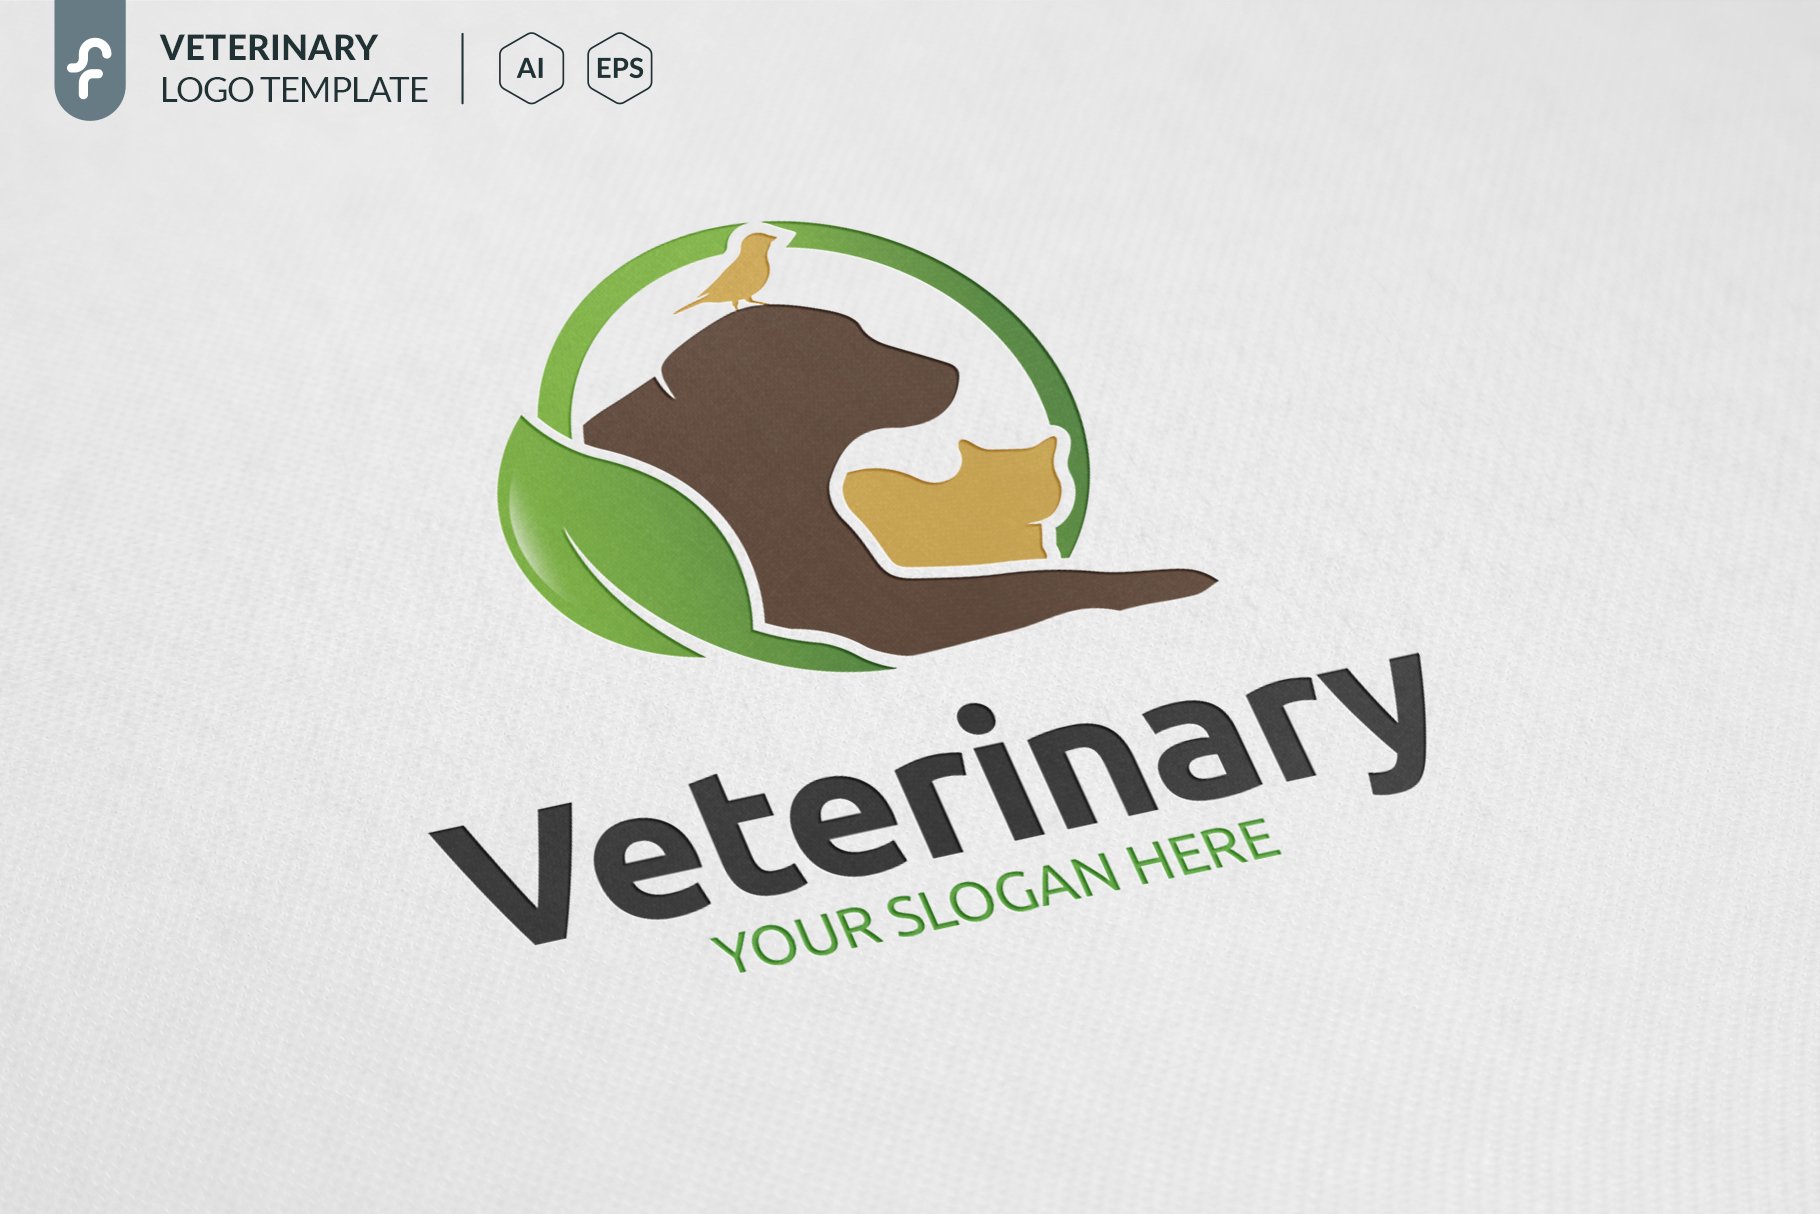 Veterinary Logo cover image.